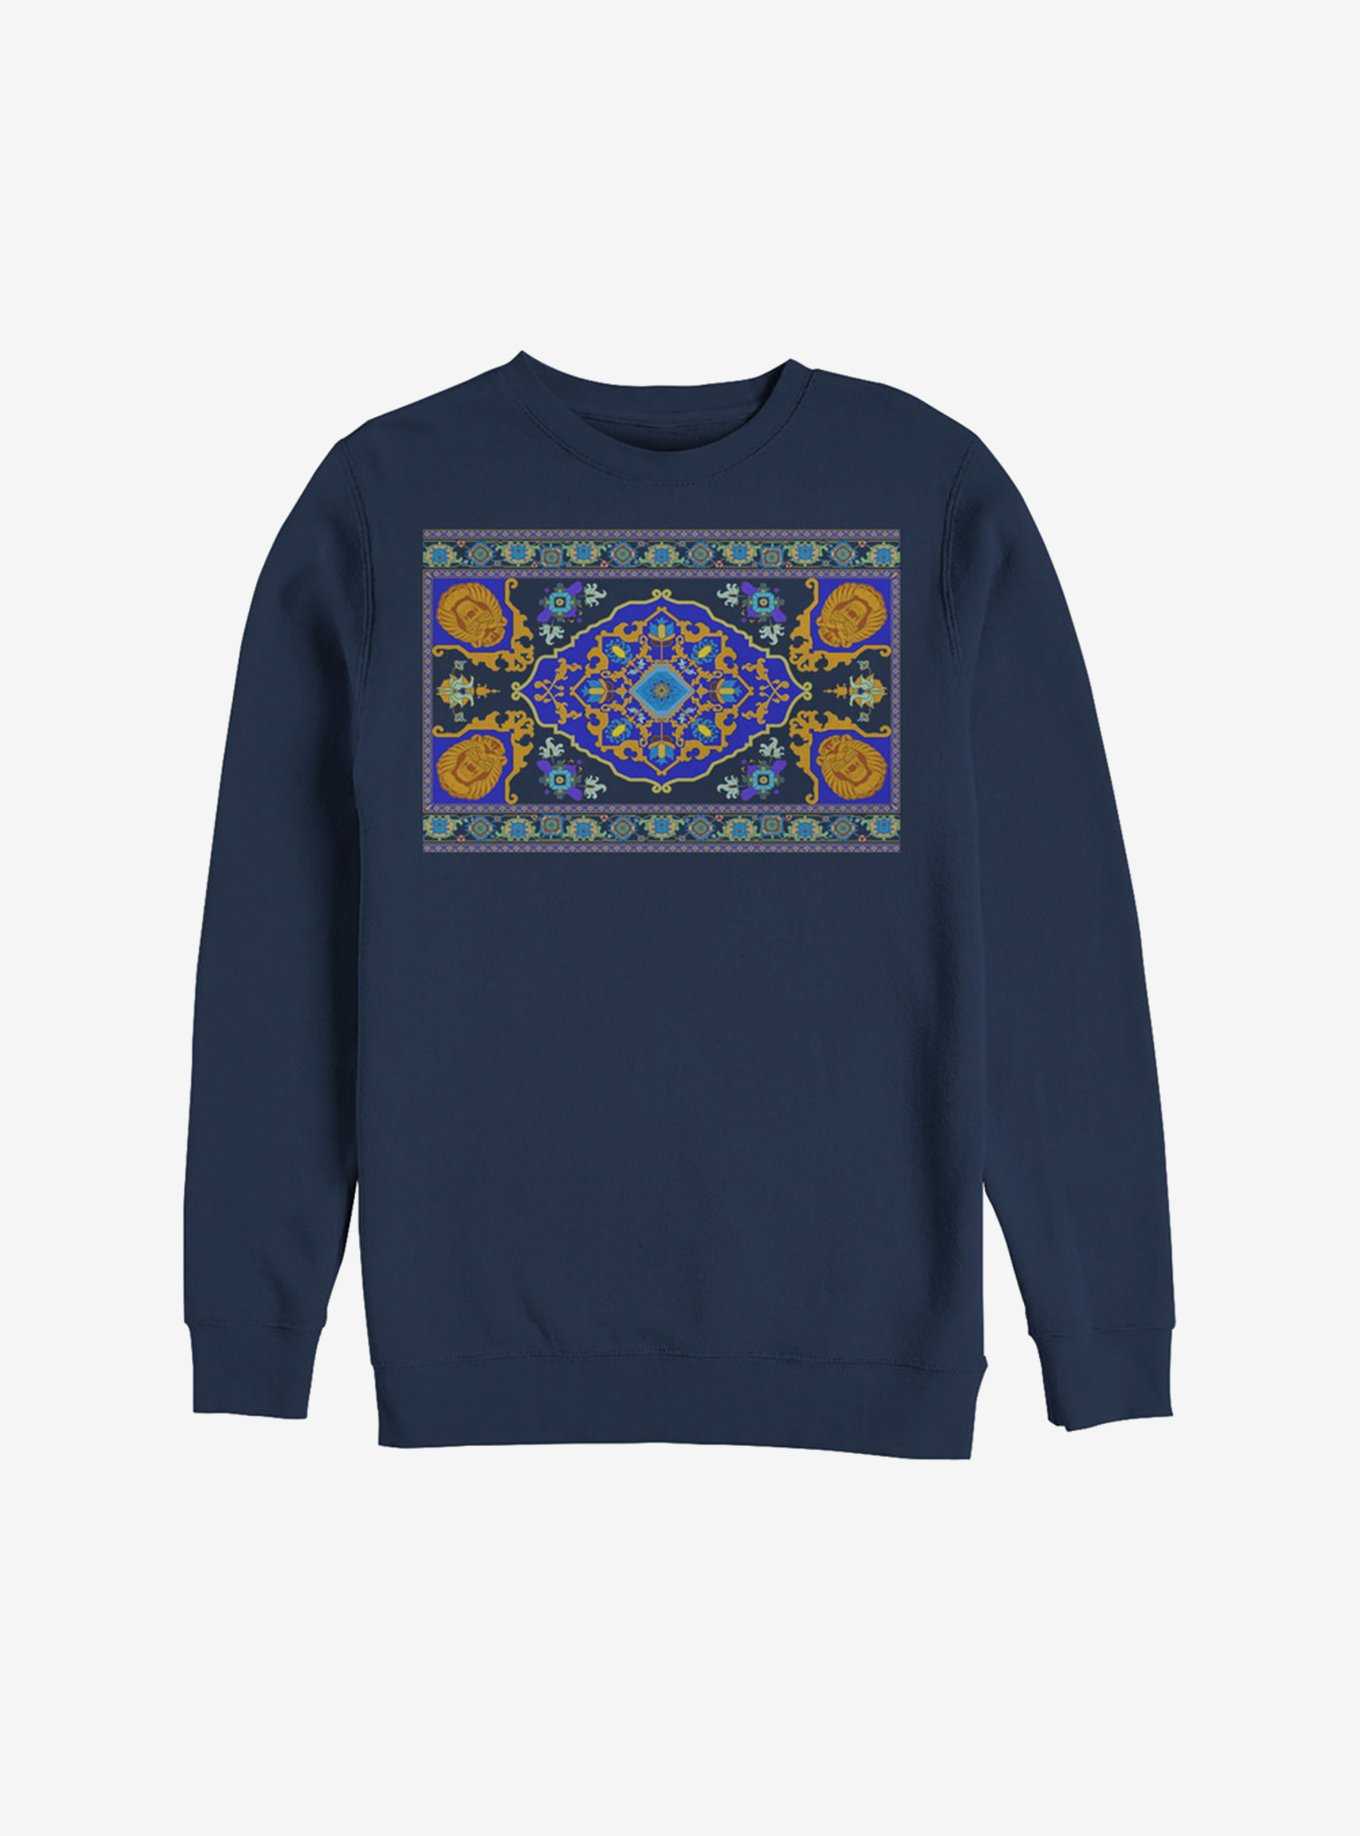 Disney Aladdin 2019 Magic Carpet Panel Print Sweatshirt, , hi-res